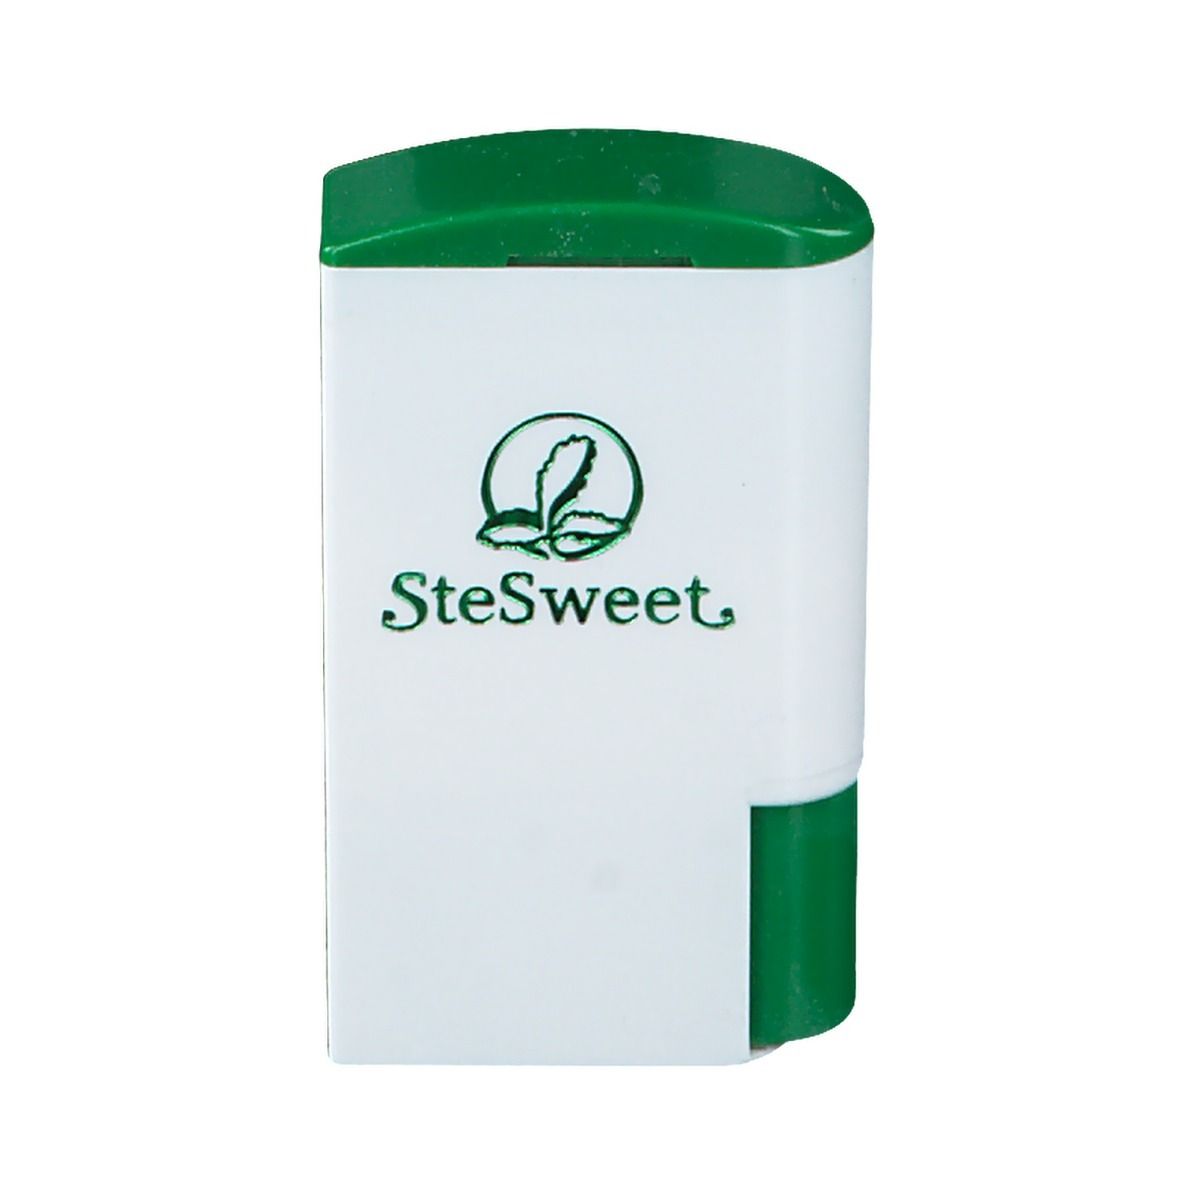 Stesweet Stevia